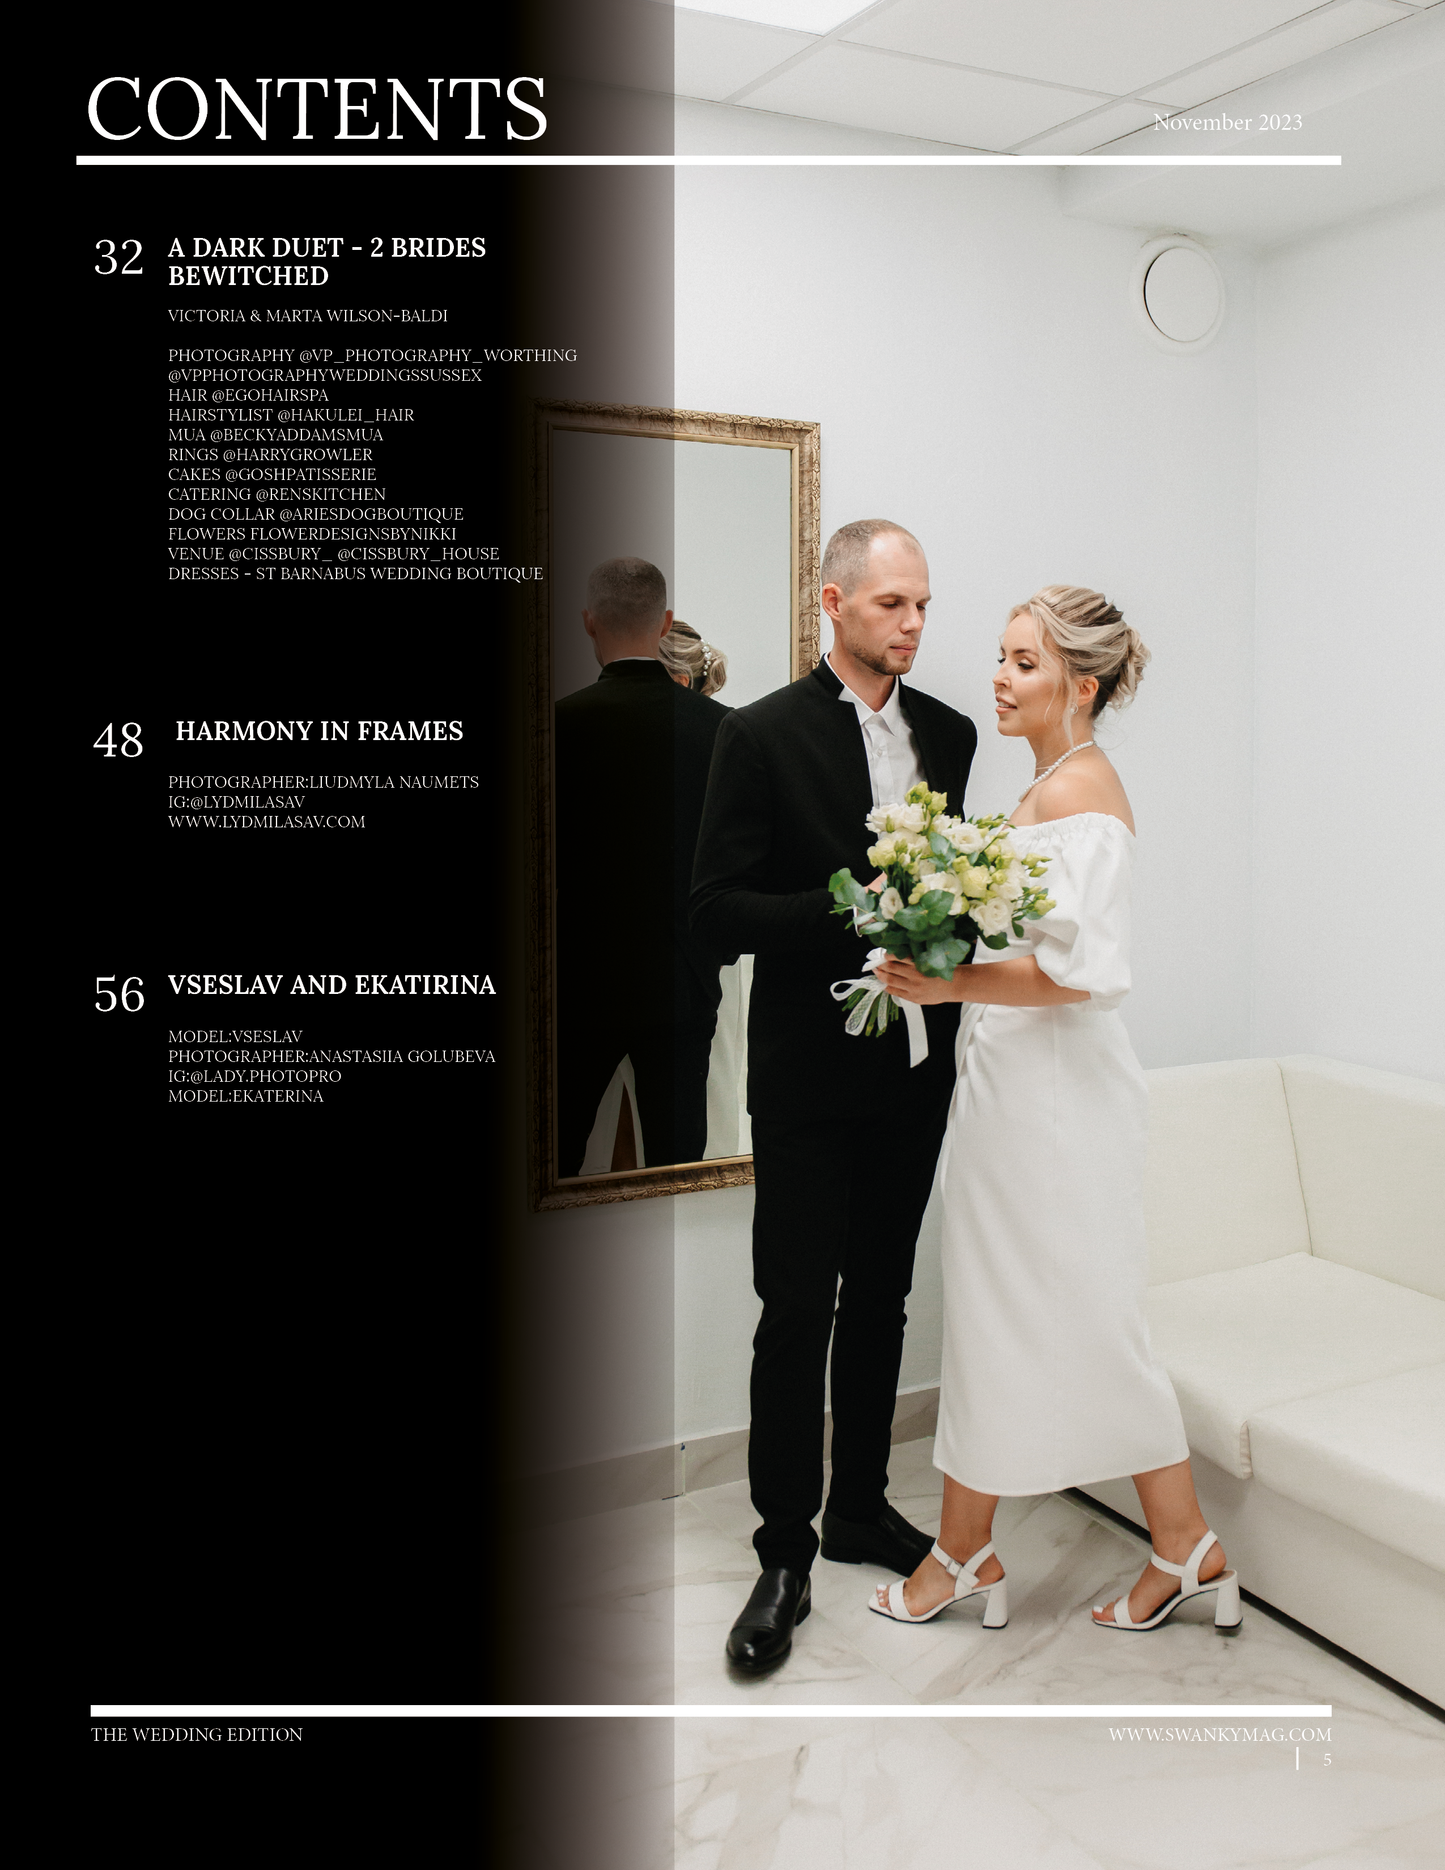 Swanky Magazine Weddings Edition: November 2023